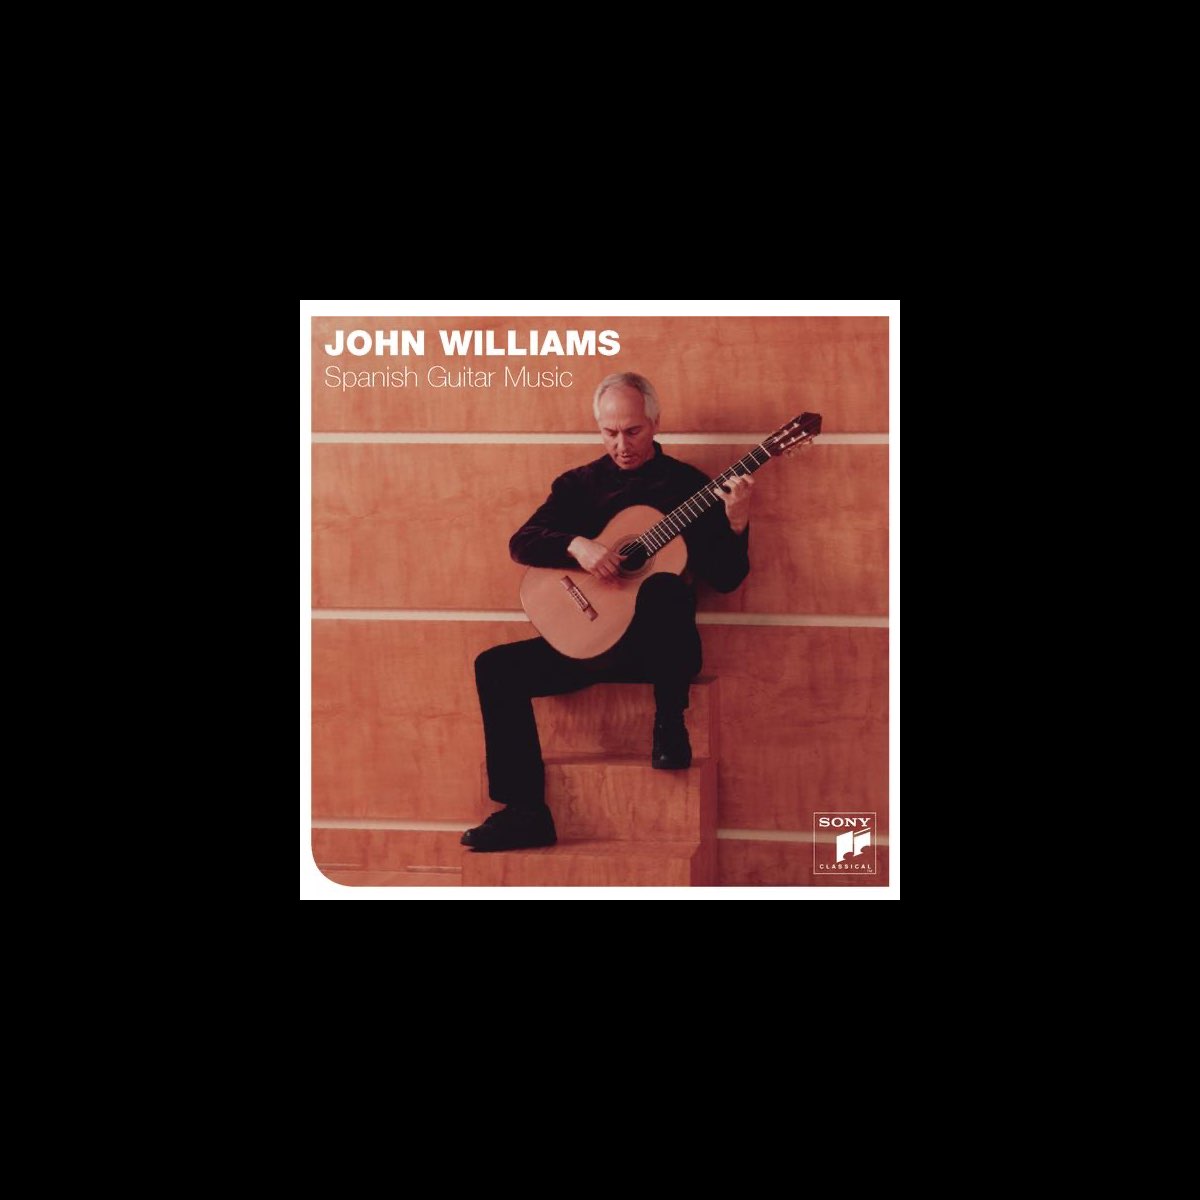 Spanish Guitar Music - Album by John Williams - Apple Music